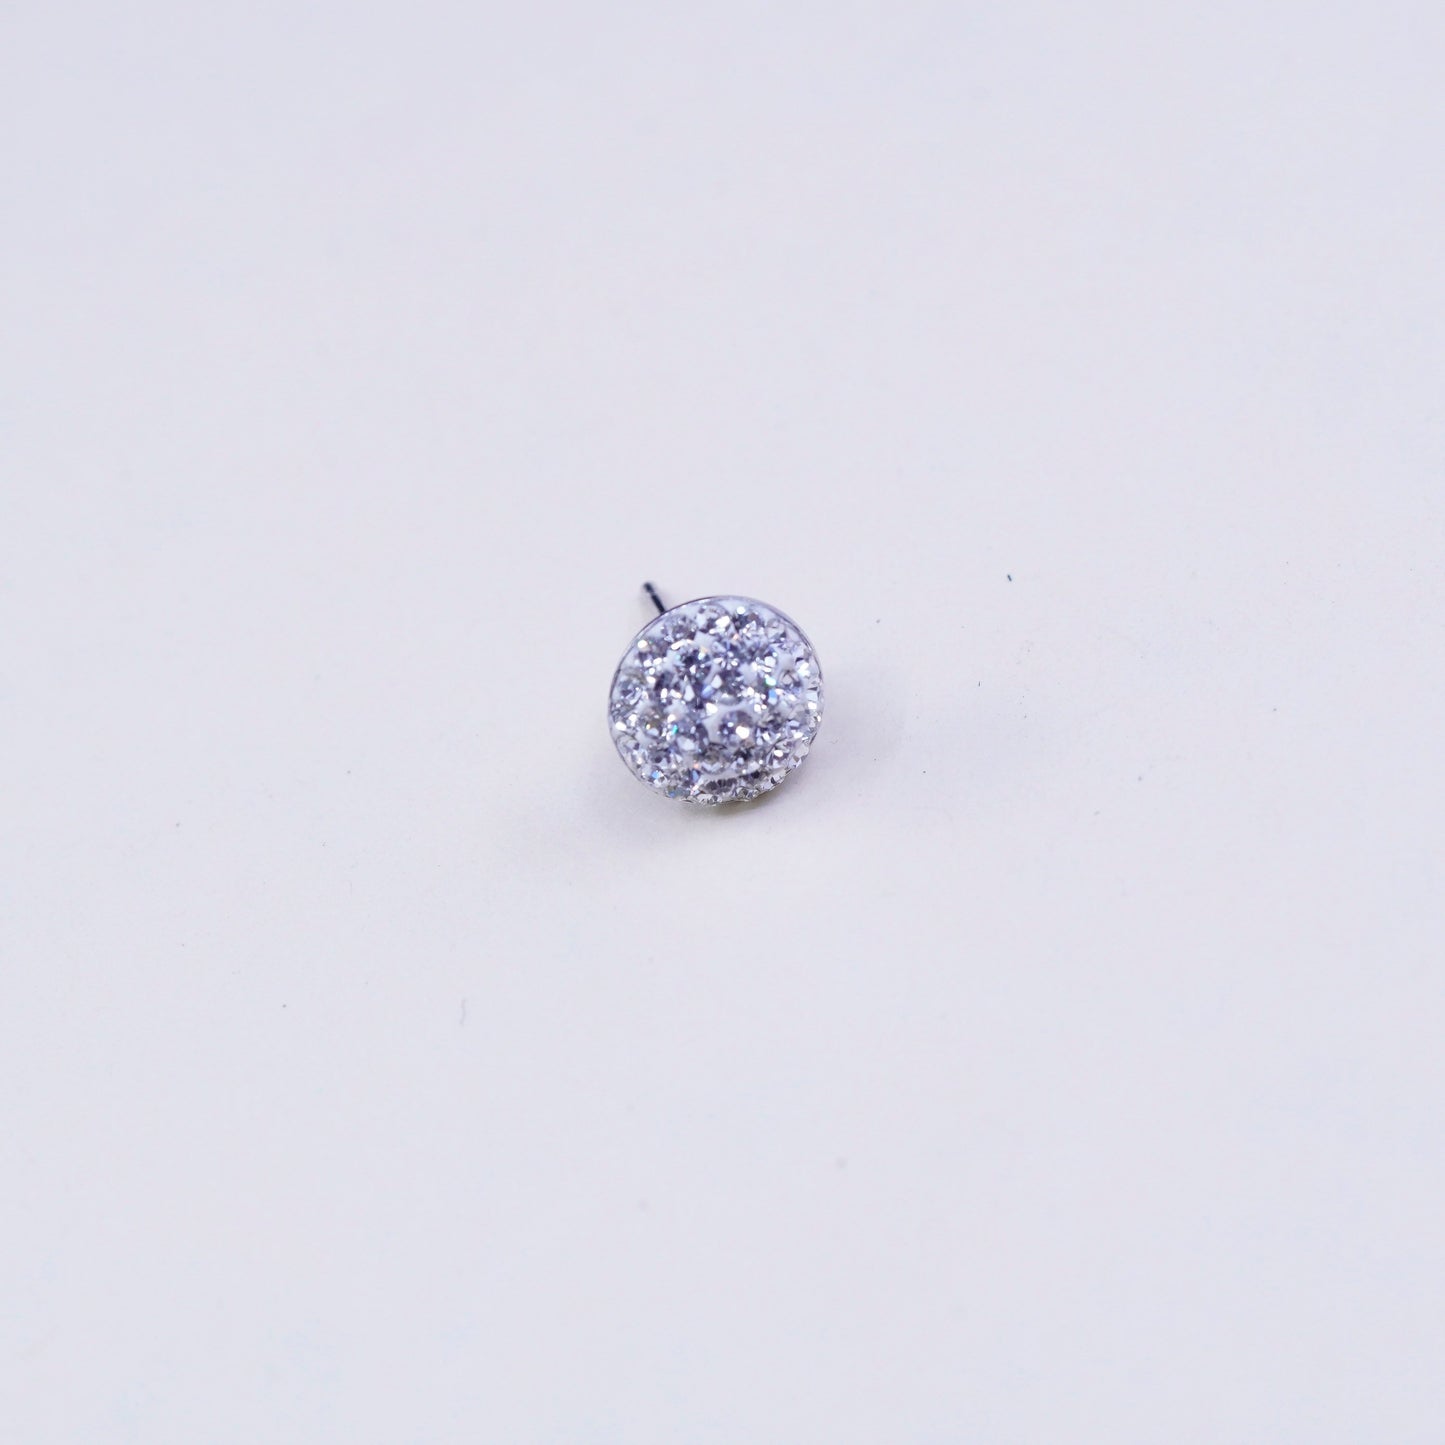 10mm, Vintage sterling silver cluster cz studs, fashion minimalist earrings